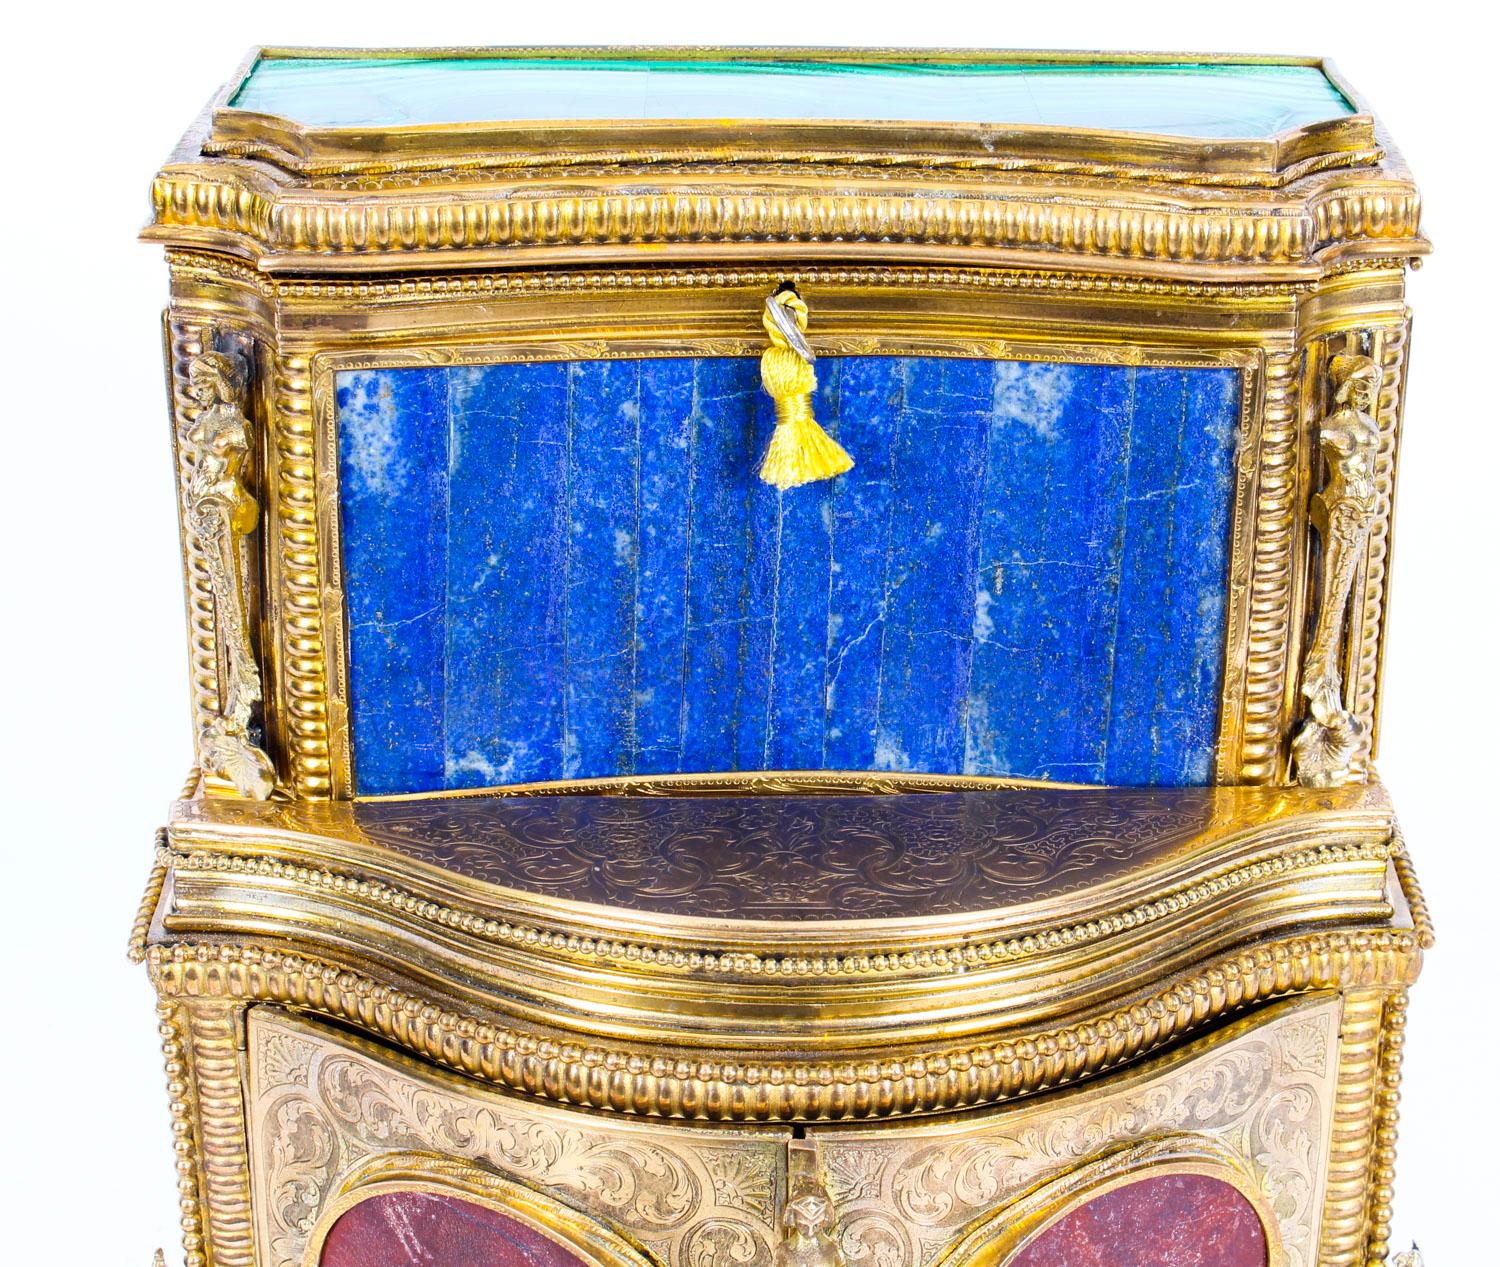 French 19th Century Specimen Precious Hard Stone and Ormolu Mounted Jewelry Cabinet